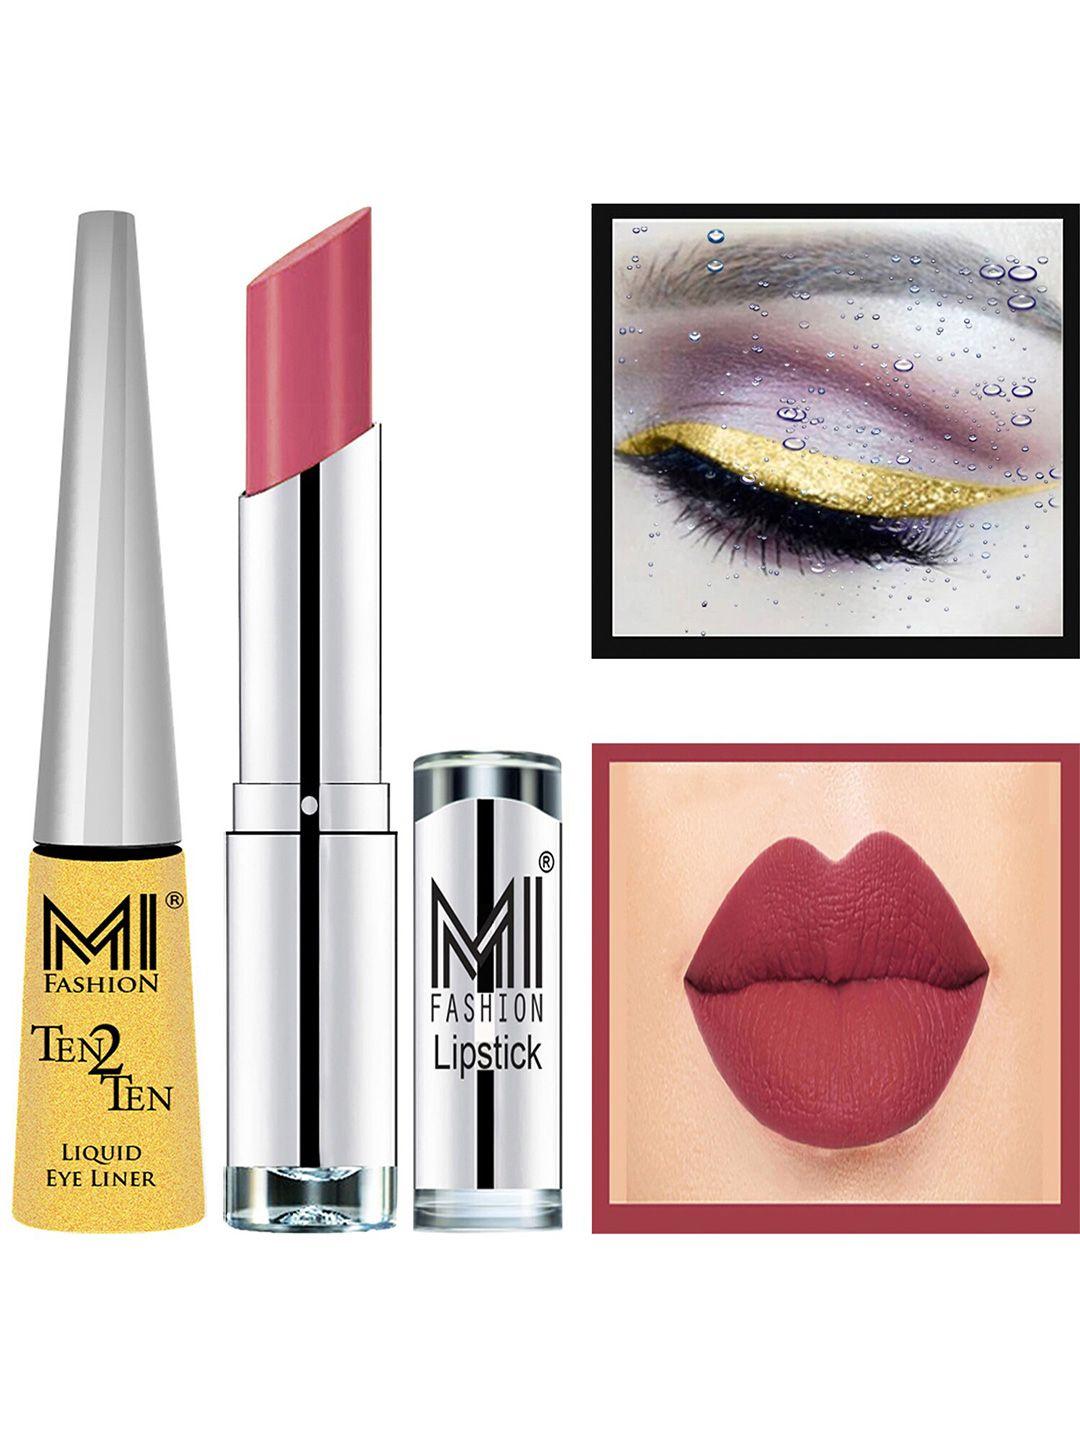 mi fashion set of ten2ten liquid eyeliner - 02 & creme matte lipstick - nude 22